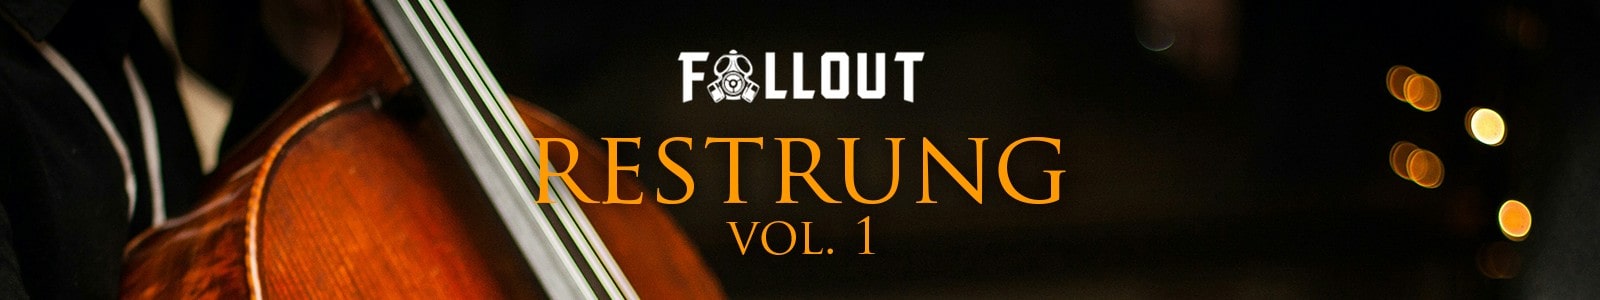 Fallout Music Group RESTRUNG vol. 1